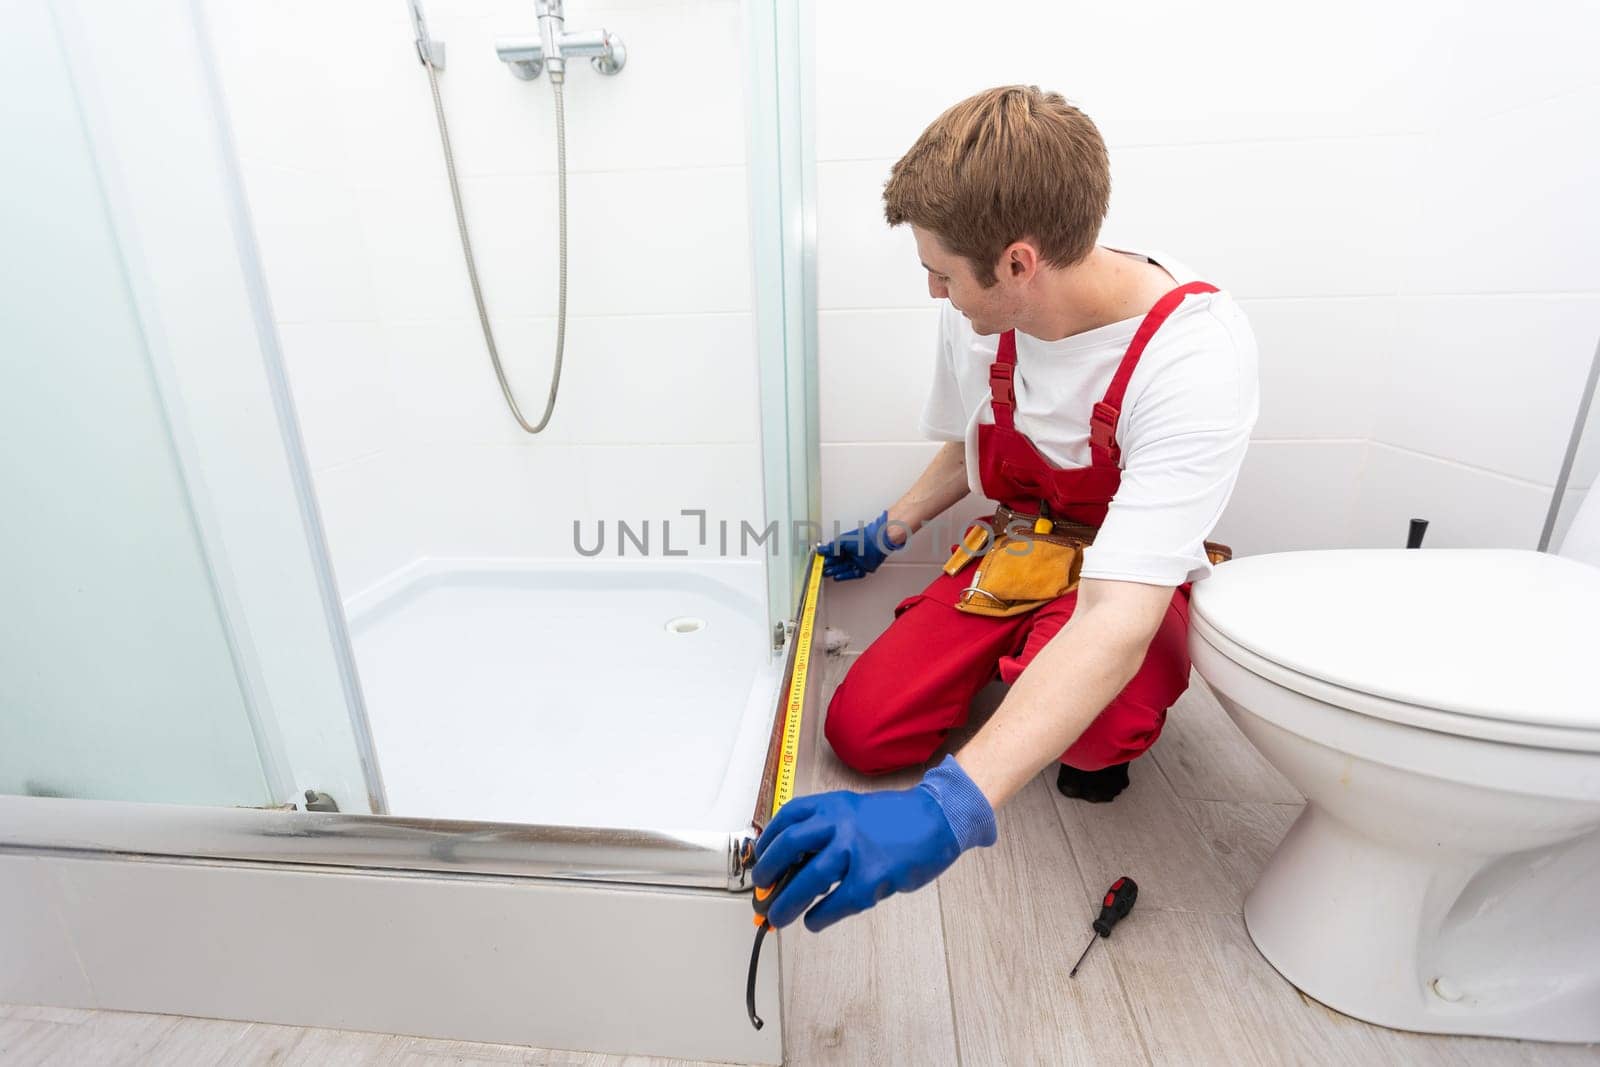 repairmen in uniform measuring modern shower cabin in bathroom by Andelov13